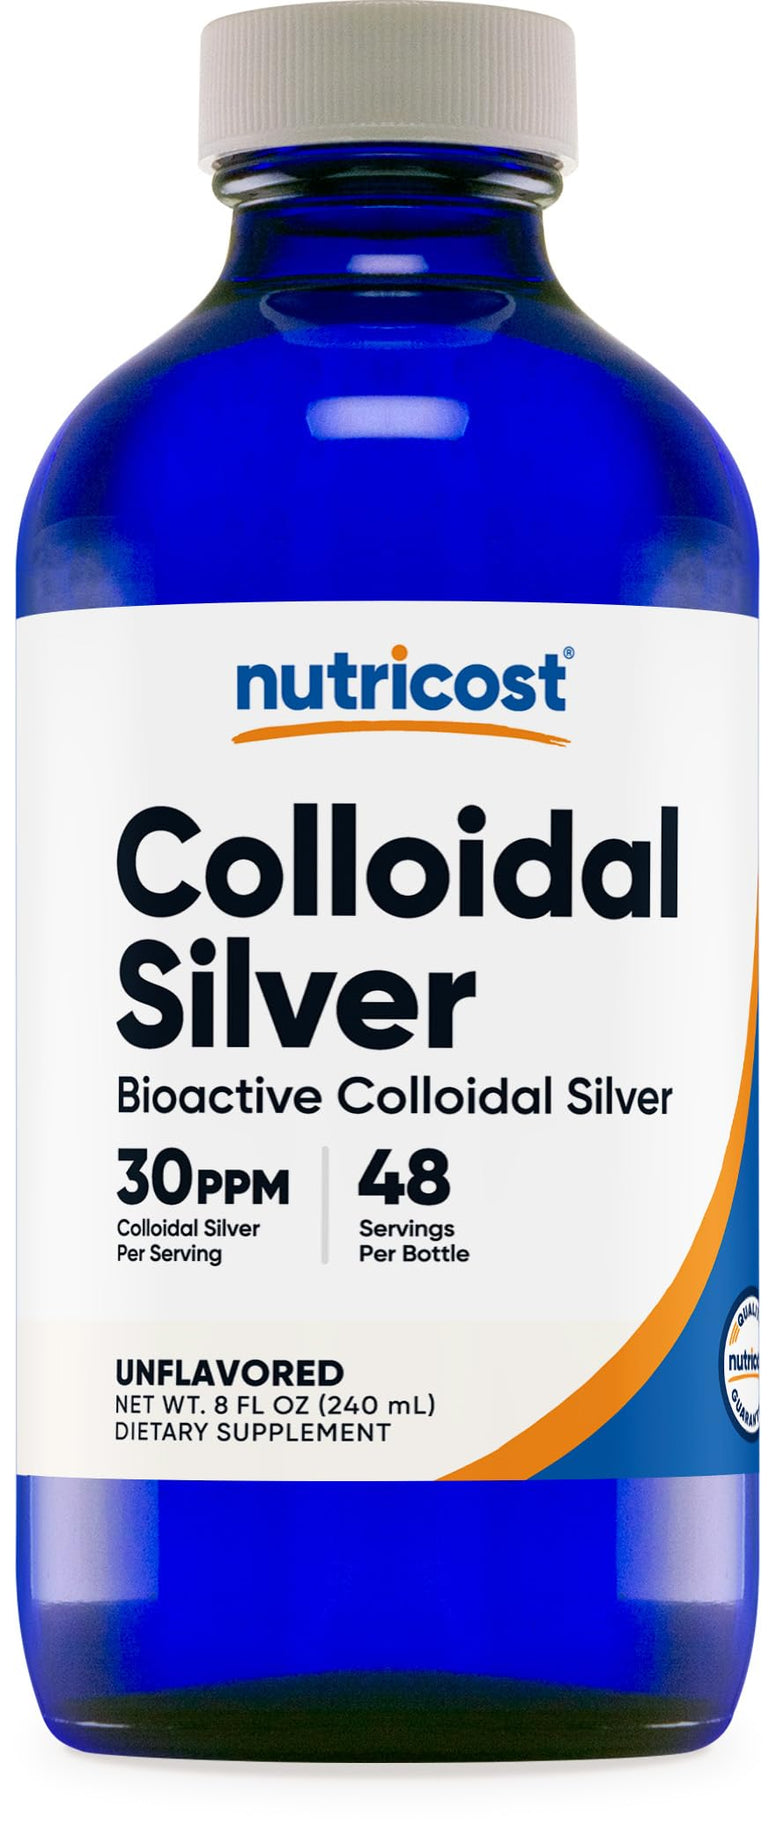 Nutricost Colloidal Silver 8oz 30PPM - Cobalt Blue Glass Bottles, Bio-Active Colloidal Silver